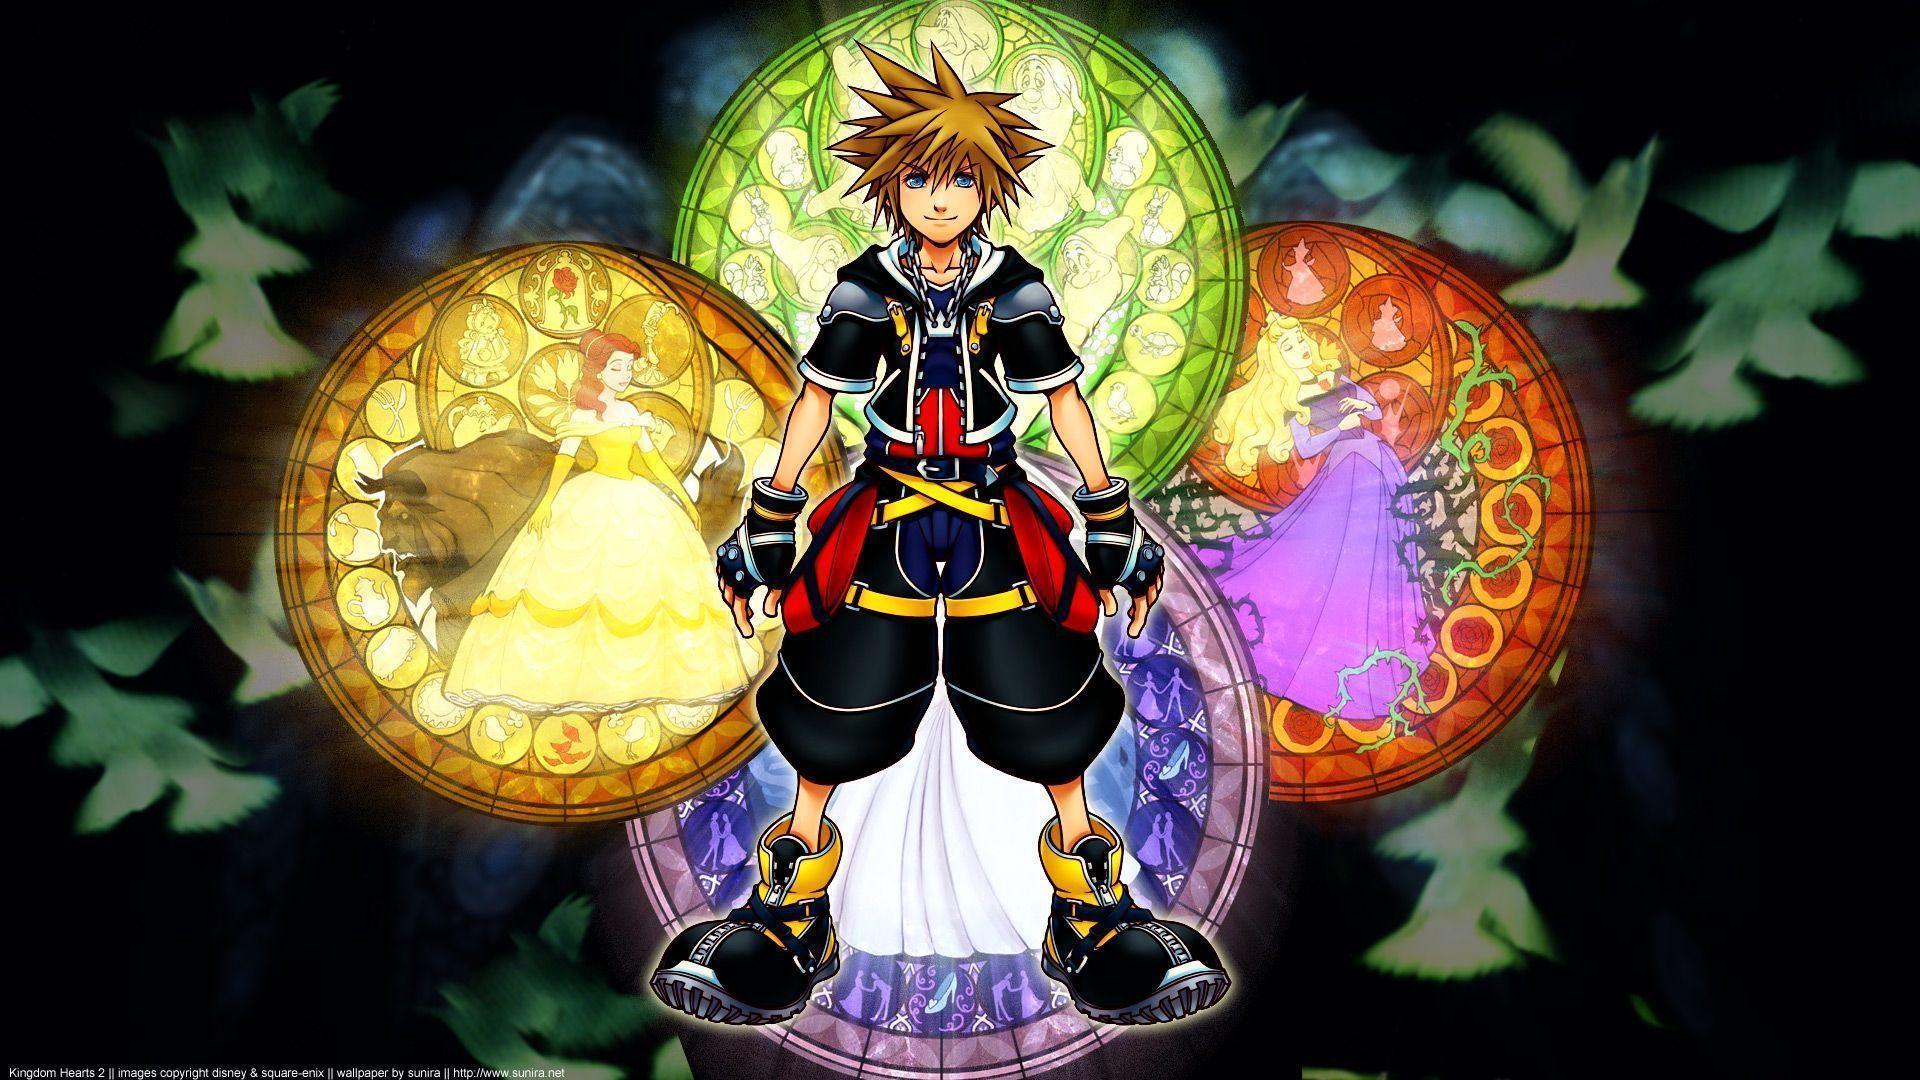 Kingdom Hearts - Kingdom Hearts Wiki, the Kingdom Hearts encyclopedia - wide 10